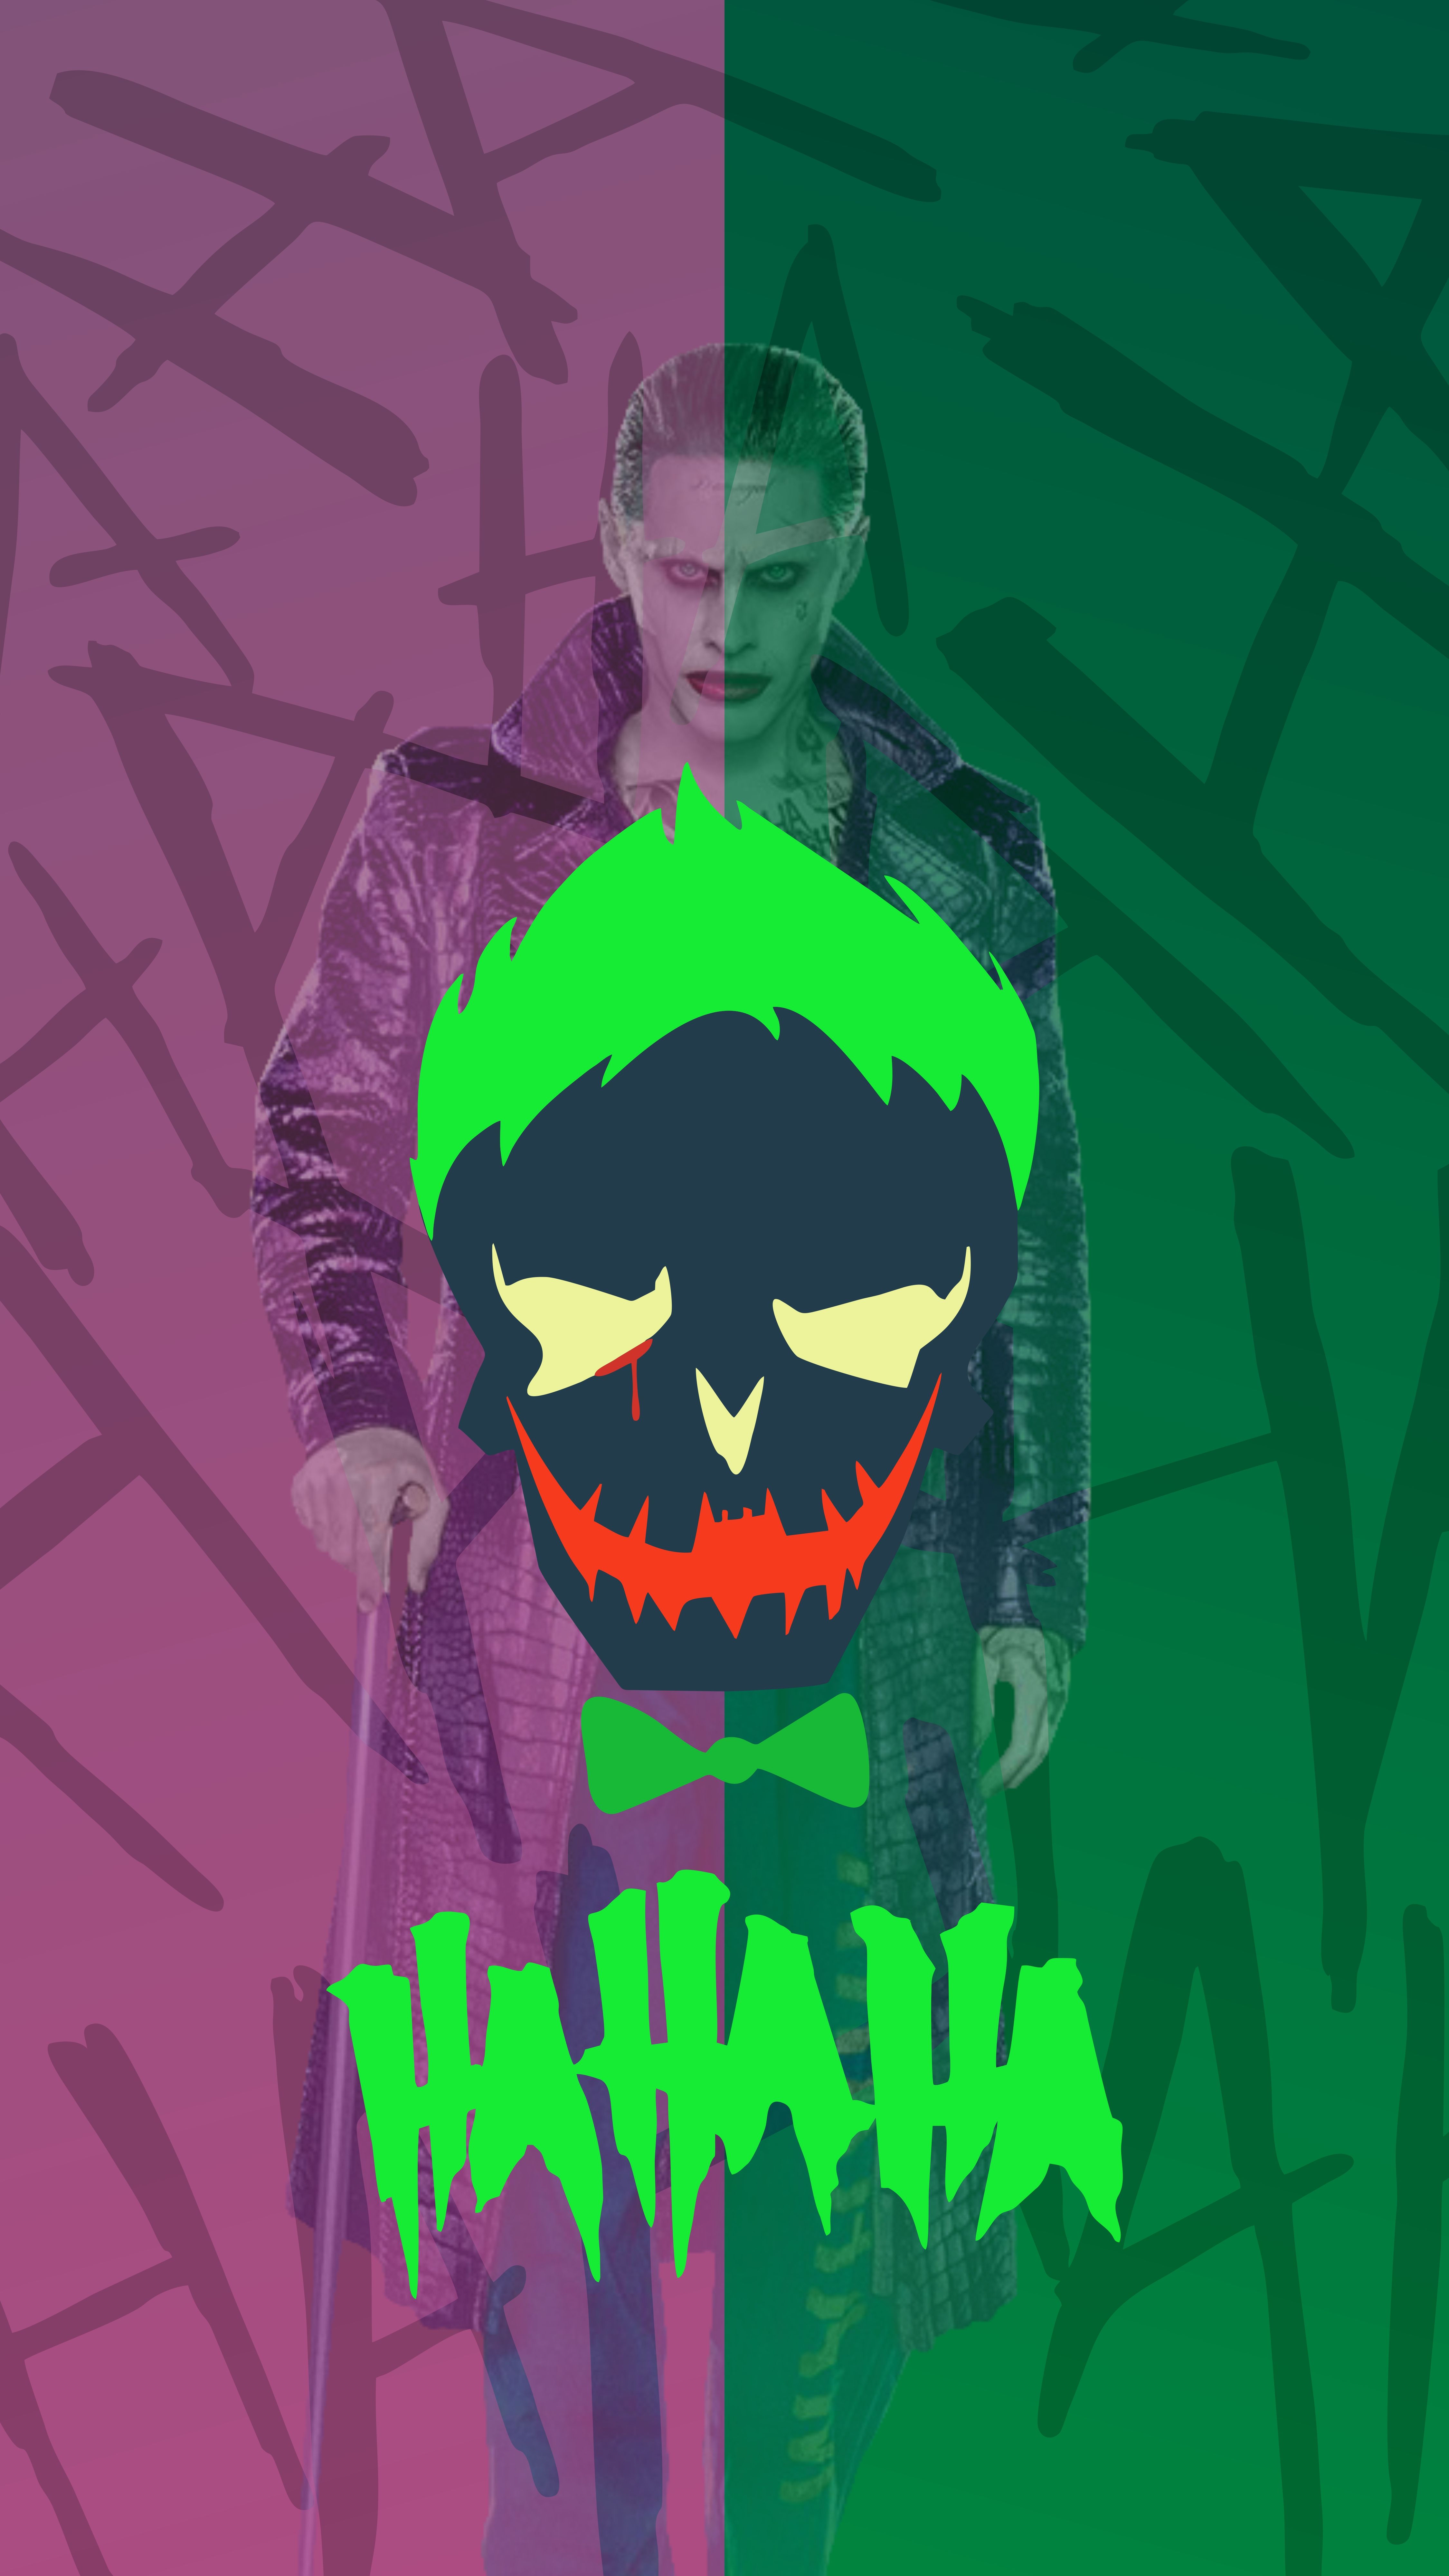 joker wallpaper for android,green,fictional character,illustration,graphic design,batman